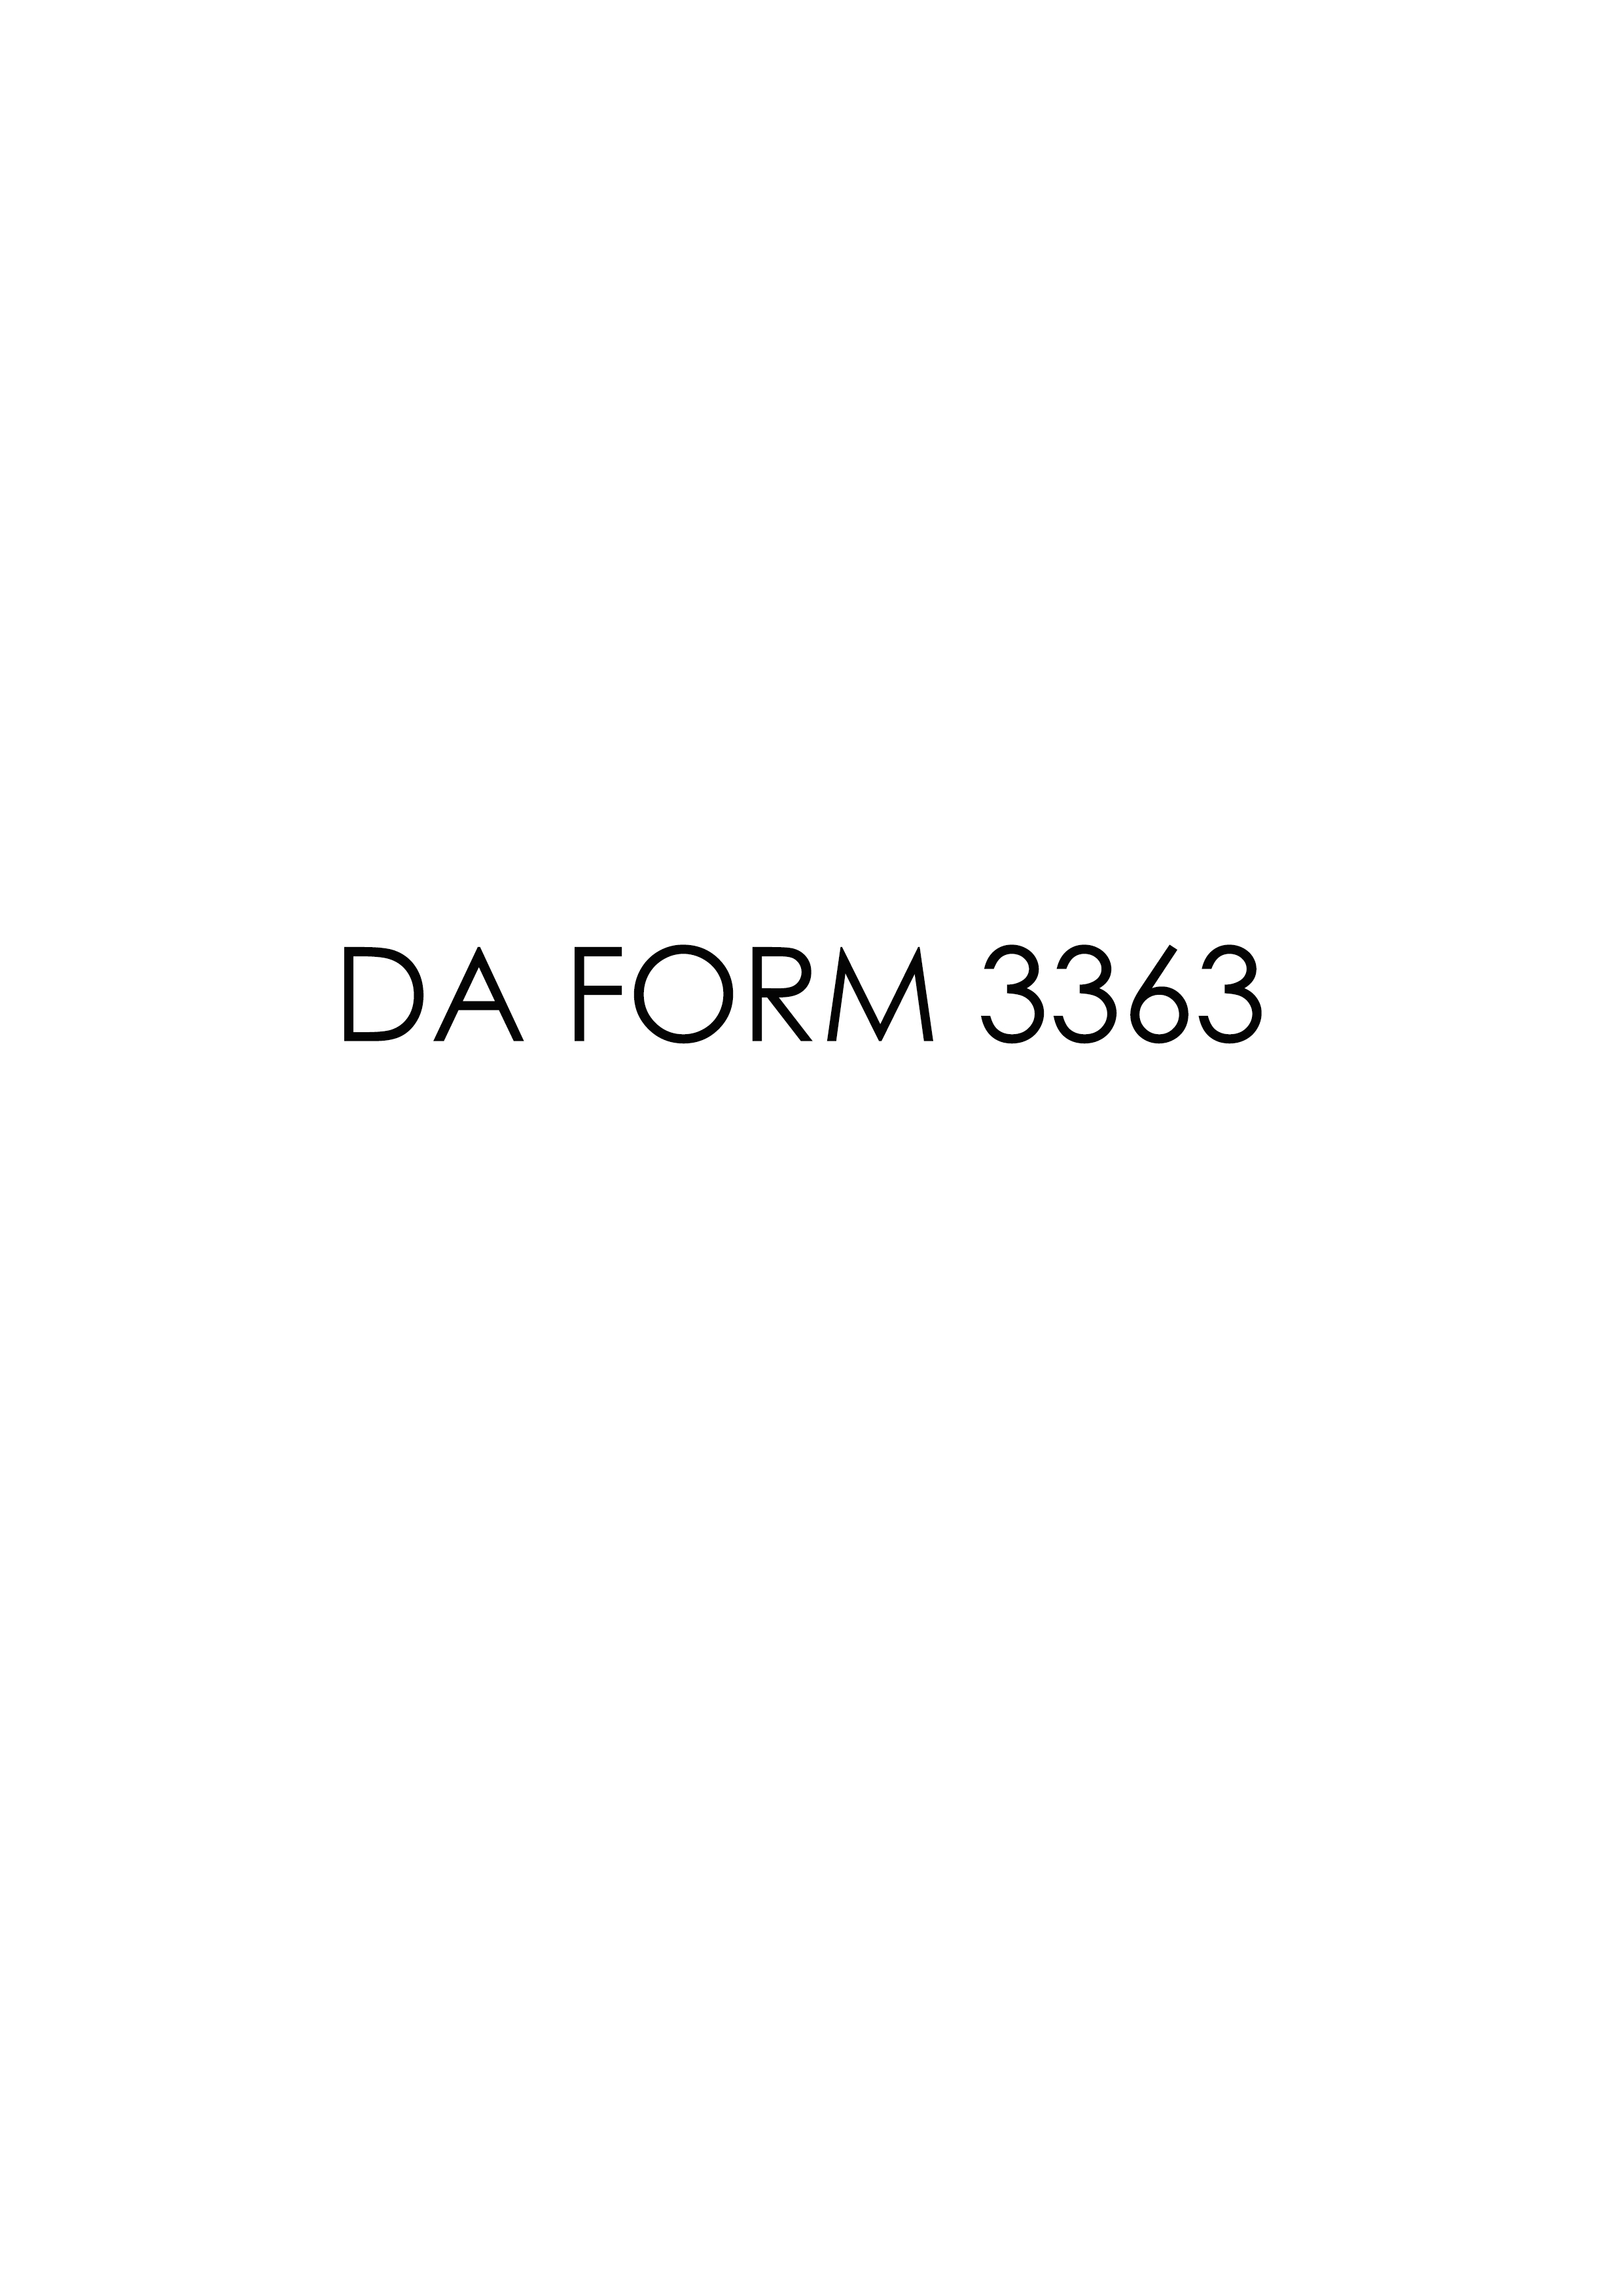 da Form 3363 fillable